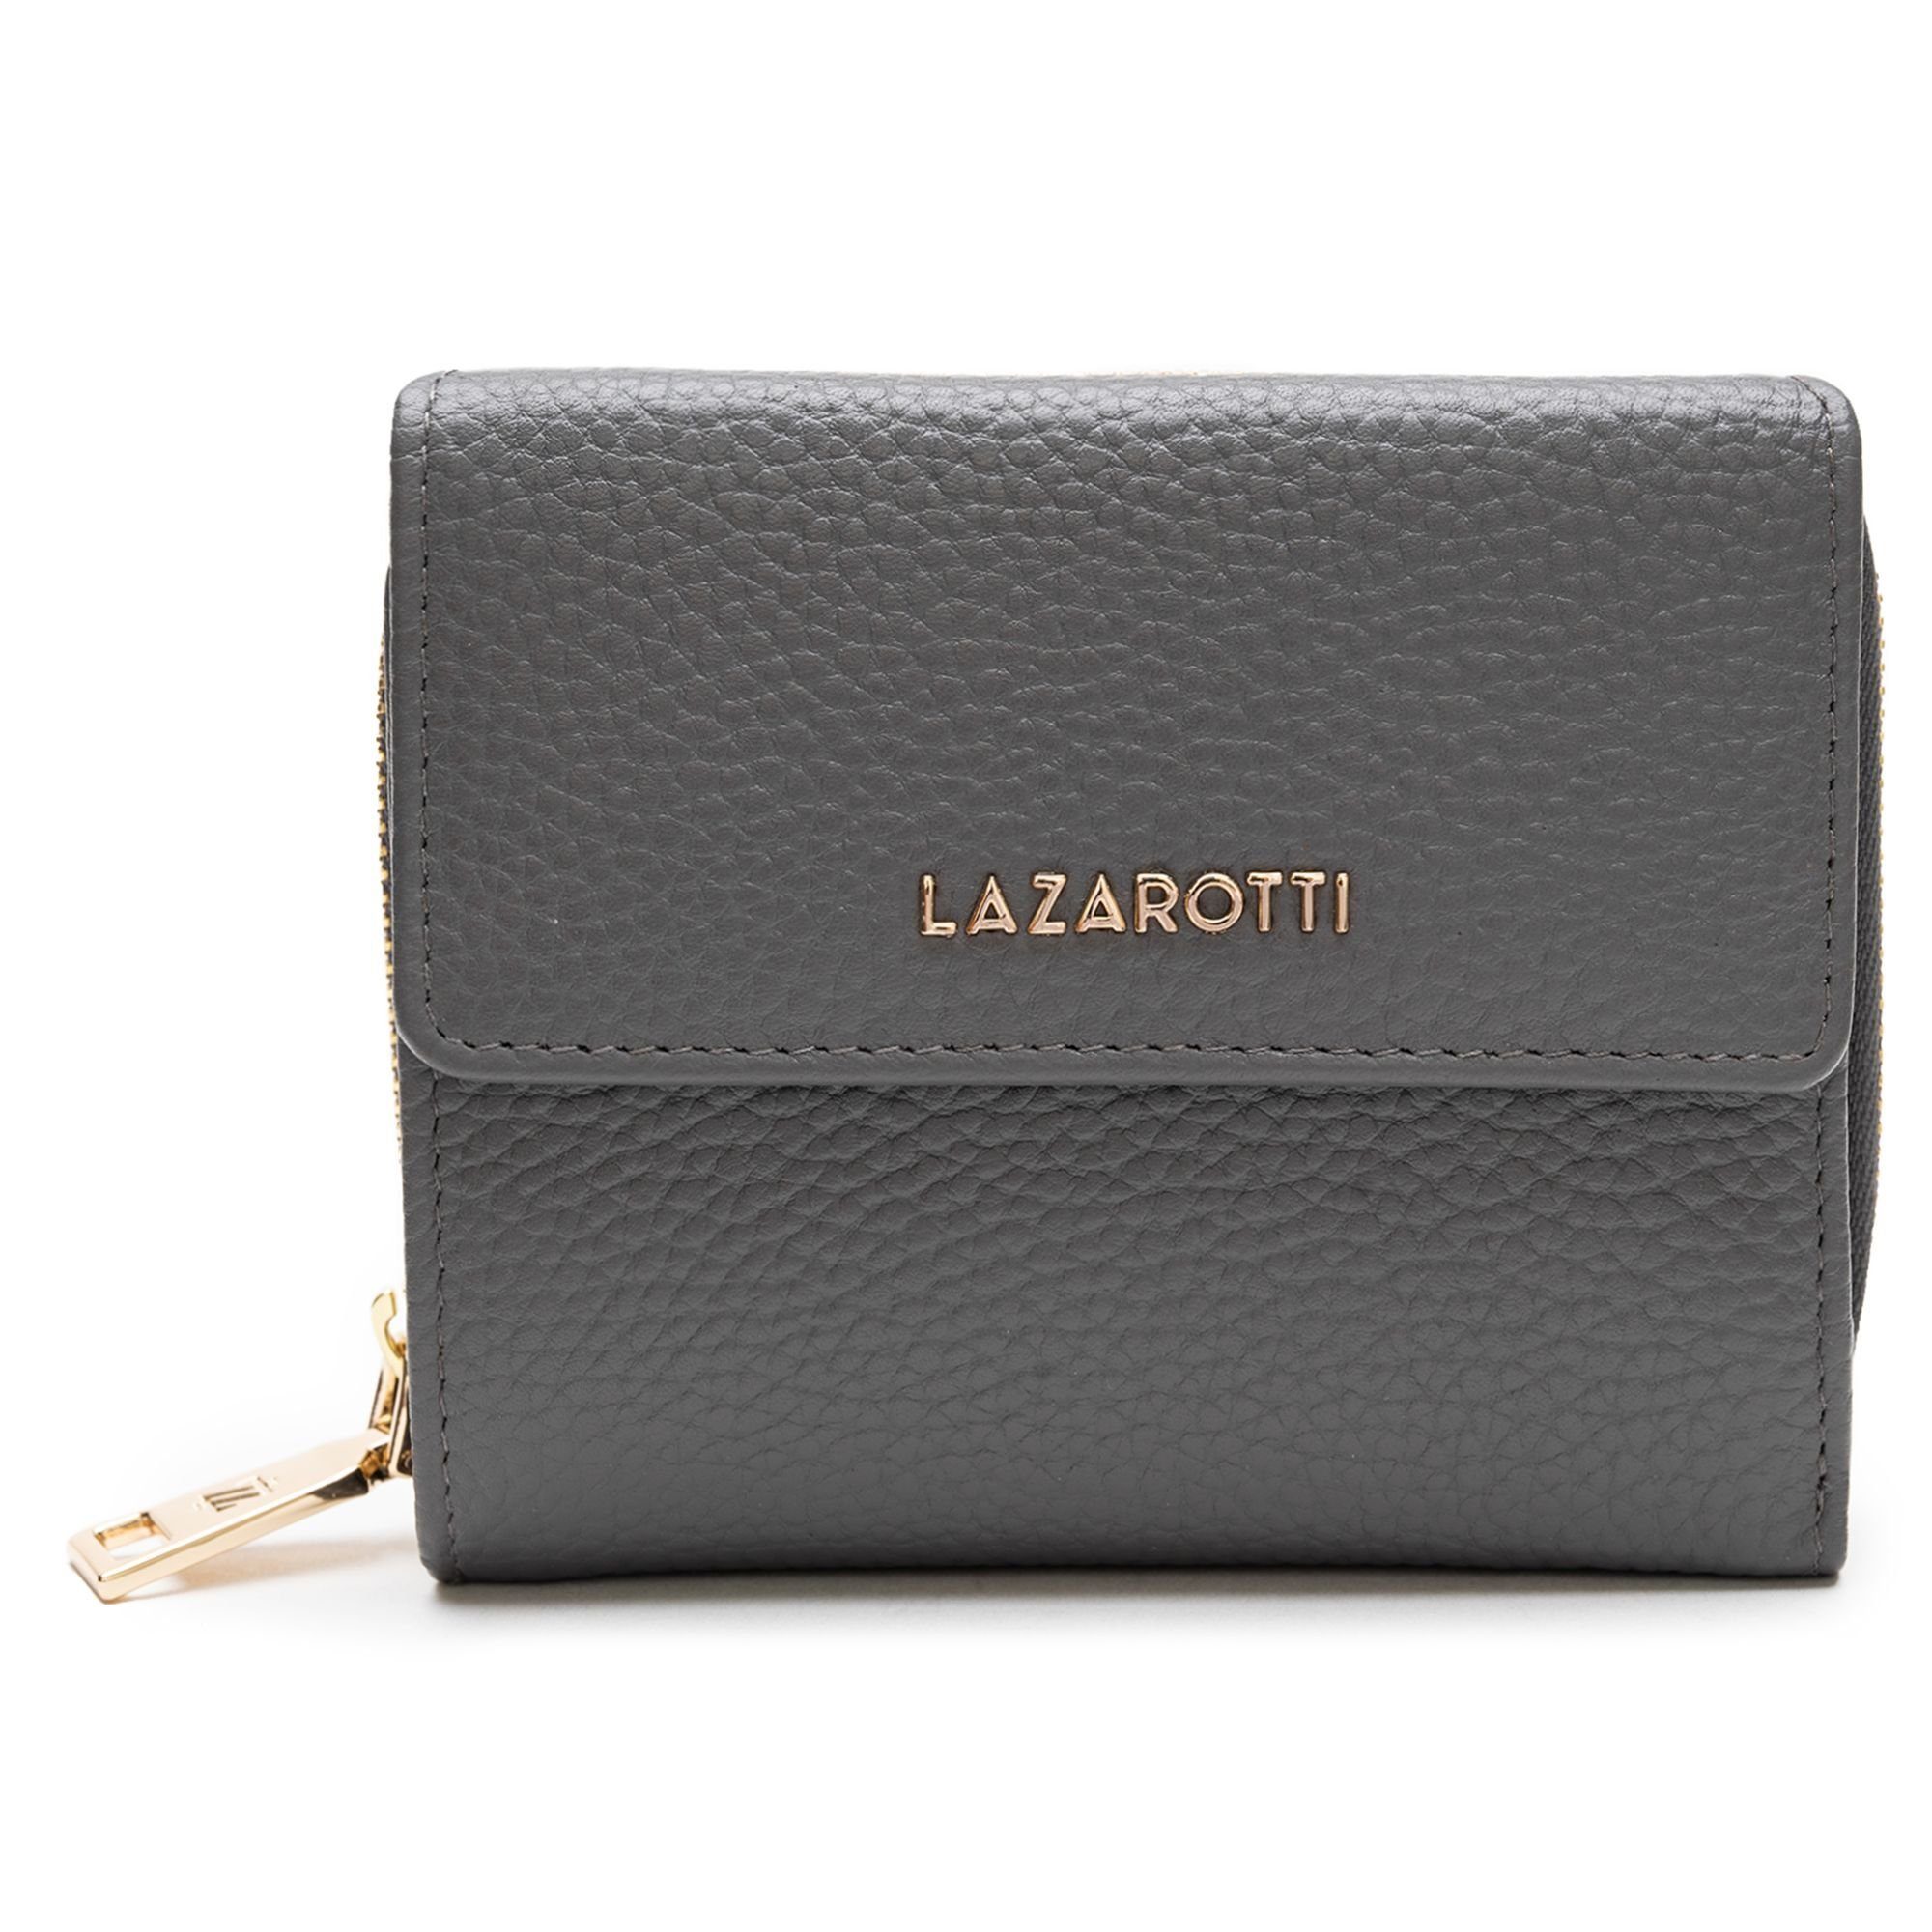 Leather, grey Leder Geldbörse Bologna Lazarotti